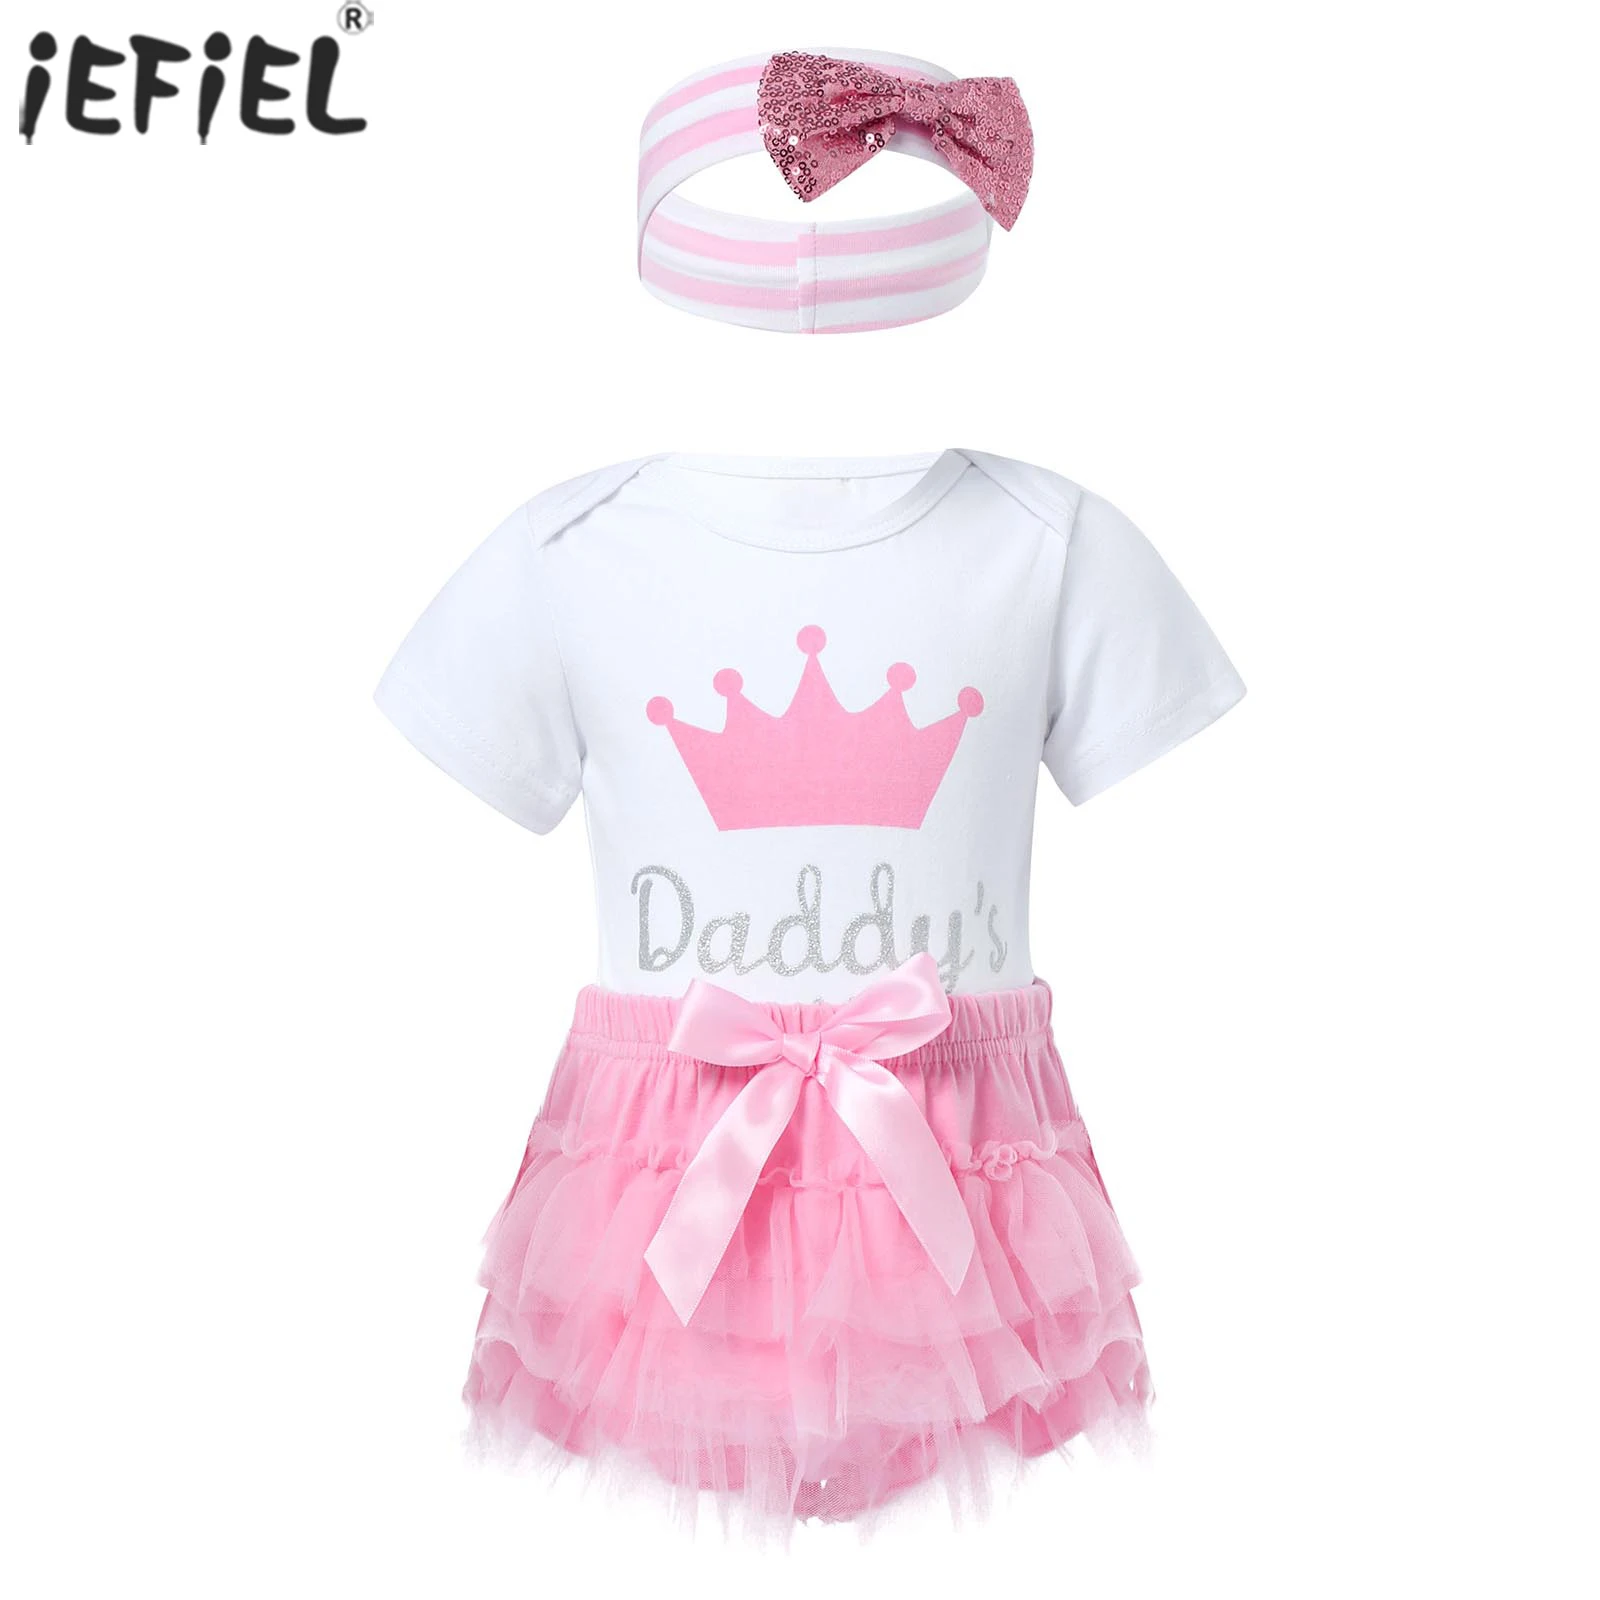 

Newborn Baby Girl Clothes Set Summer Short Sleeve Daddy's Princess Romper Tutu Shorts Headband 3Pcs Outfit Infant Clothing